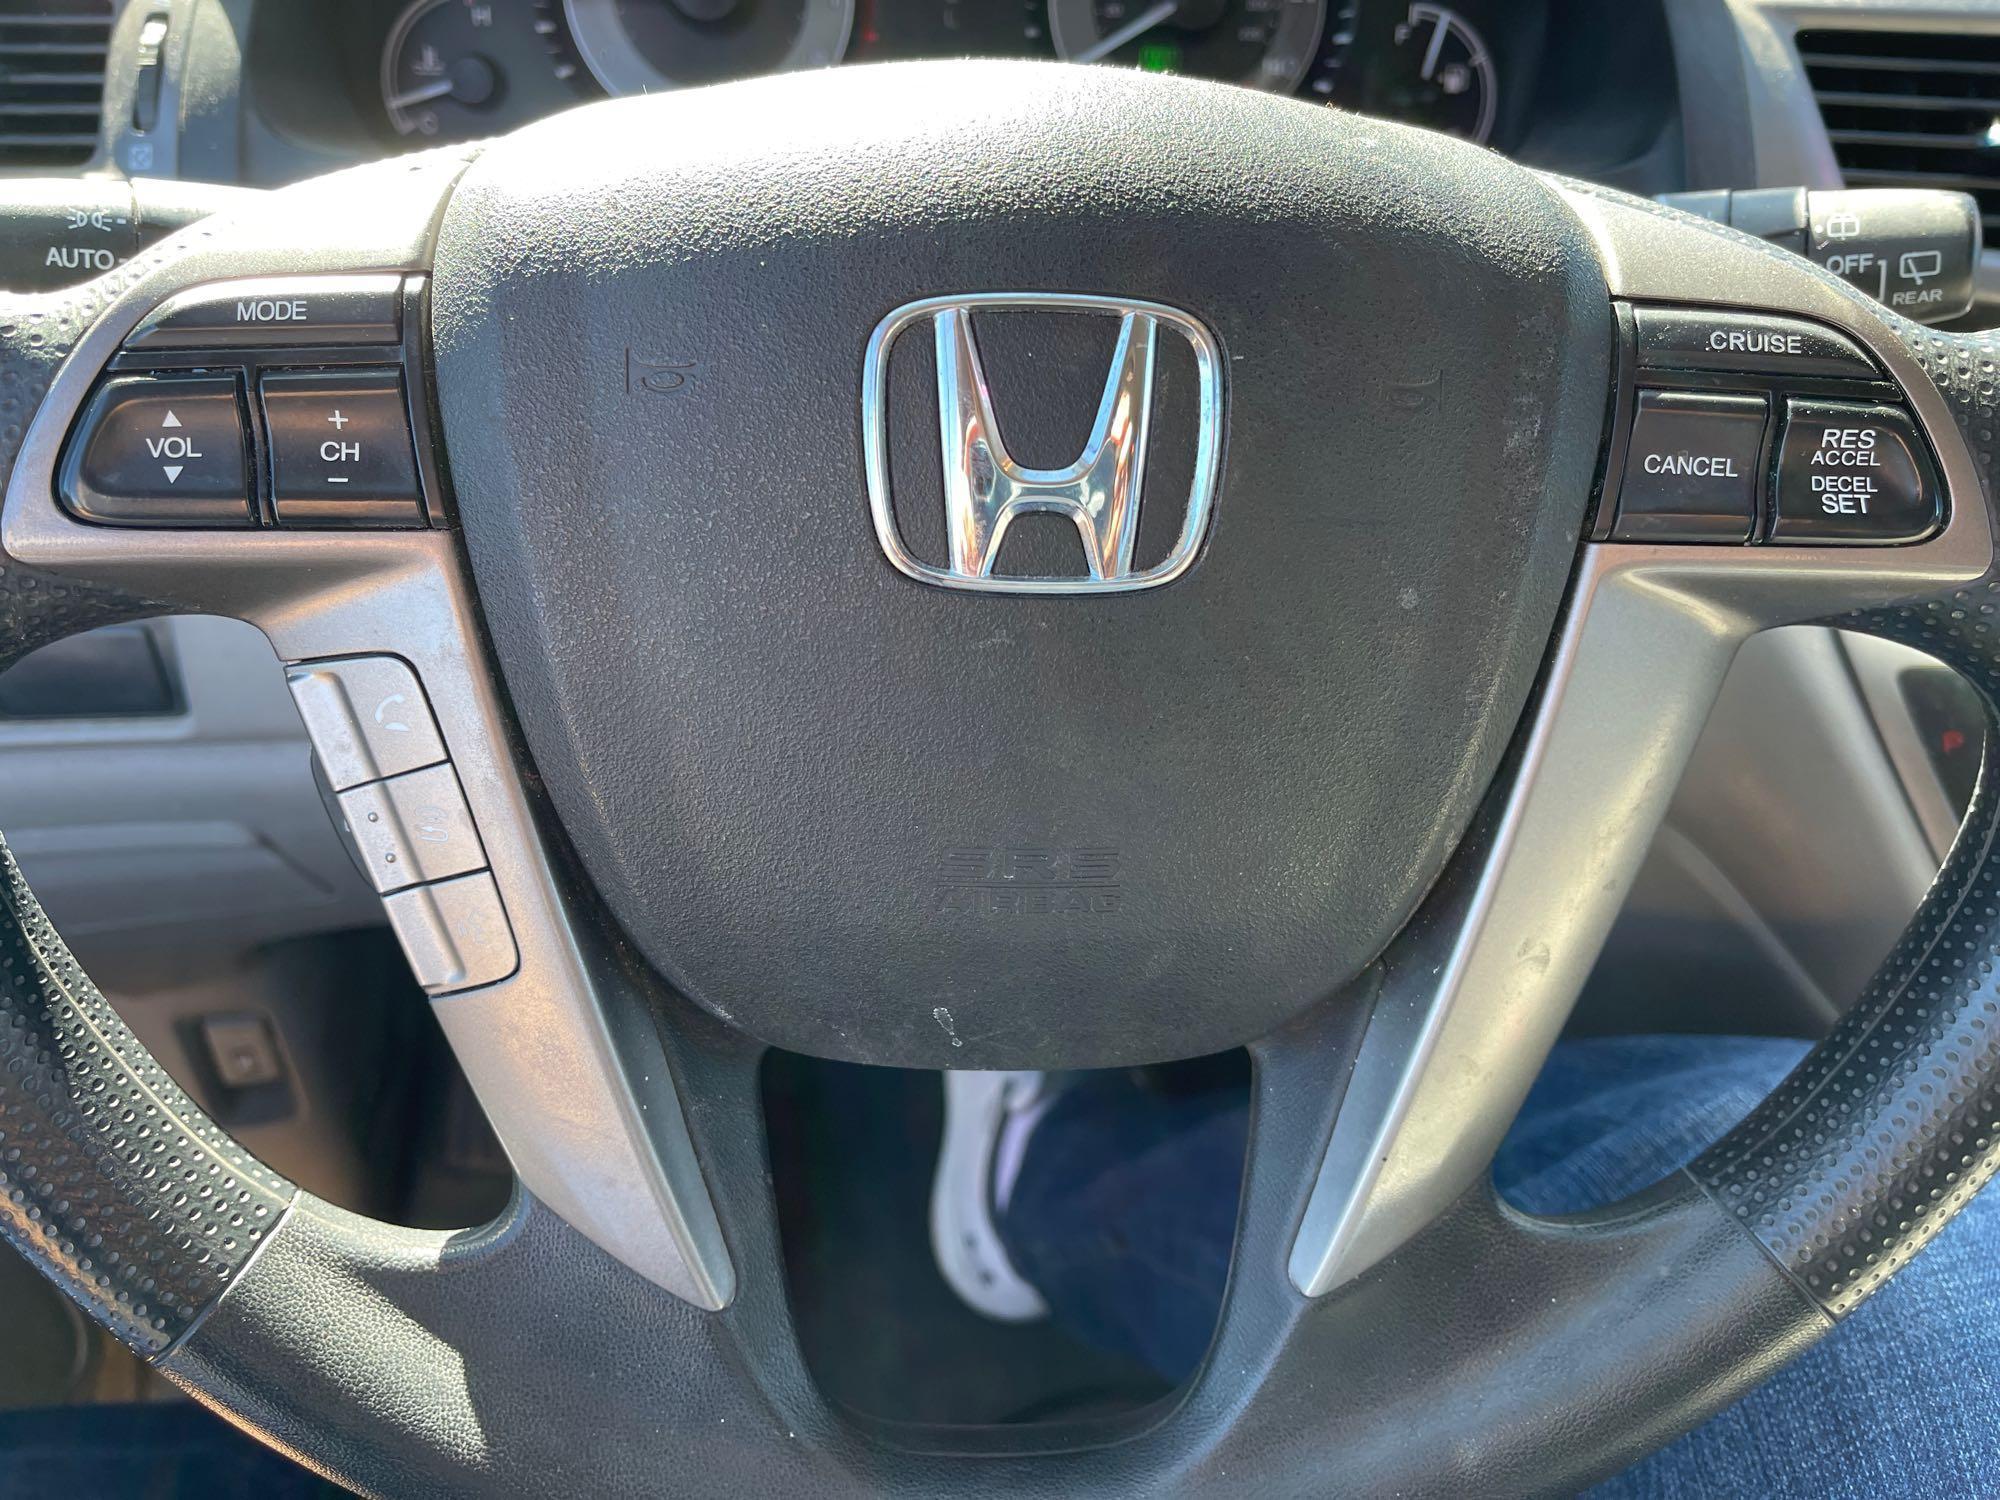 2016 Honda Odyssey SE with entertainment